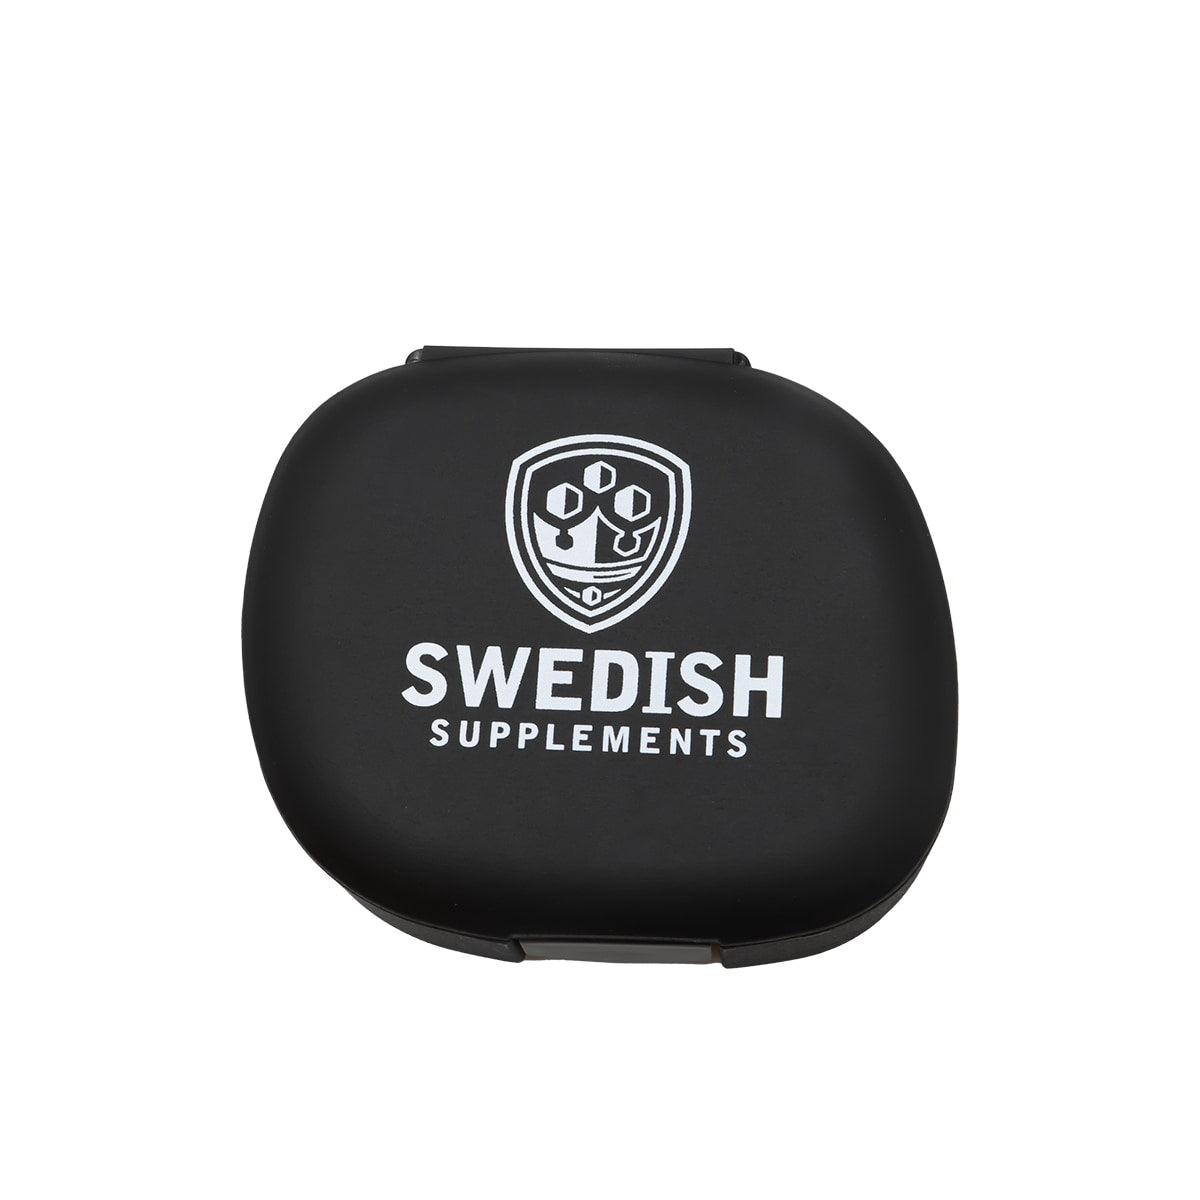 Swedish Supplements Pillbox